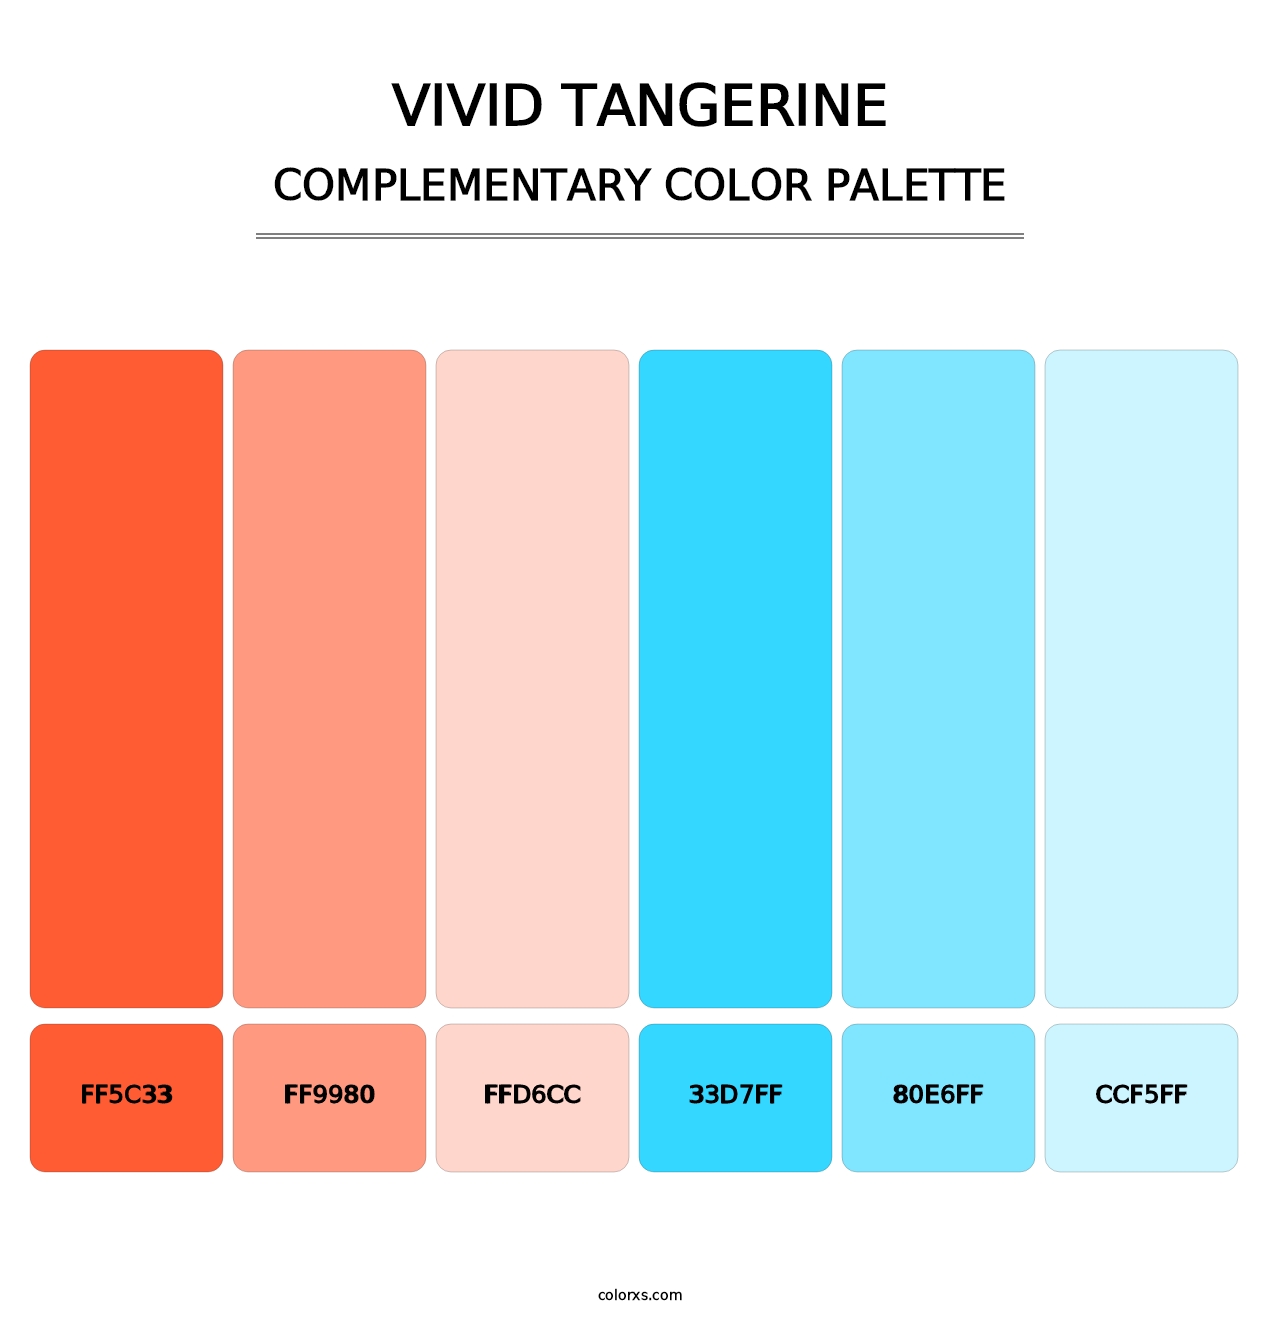 Vivid Tangerine - Complementary Color Palette